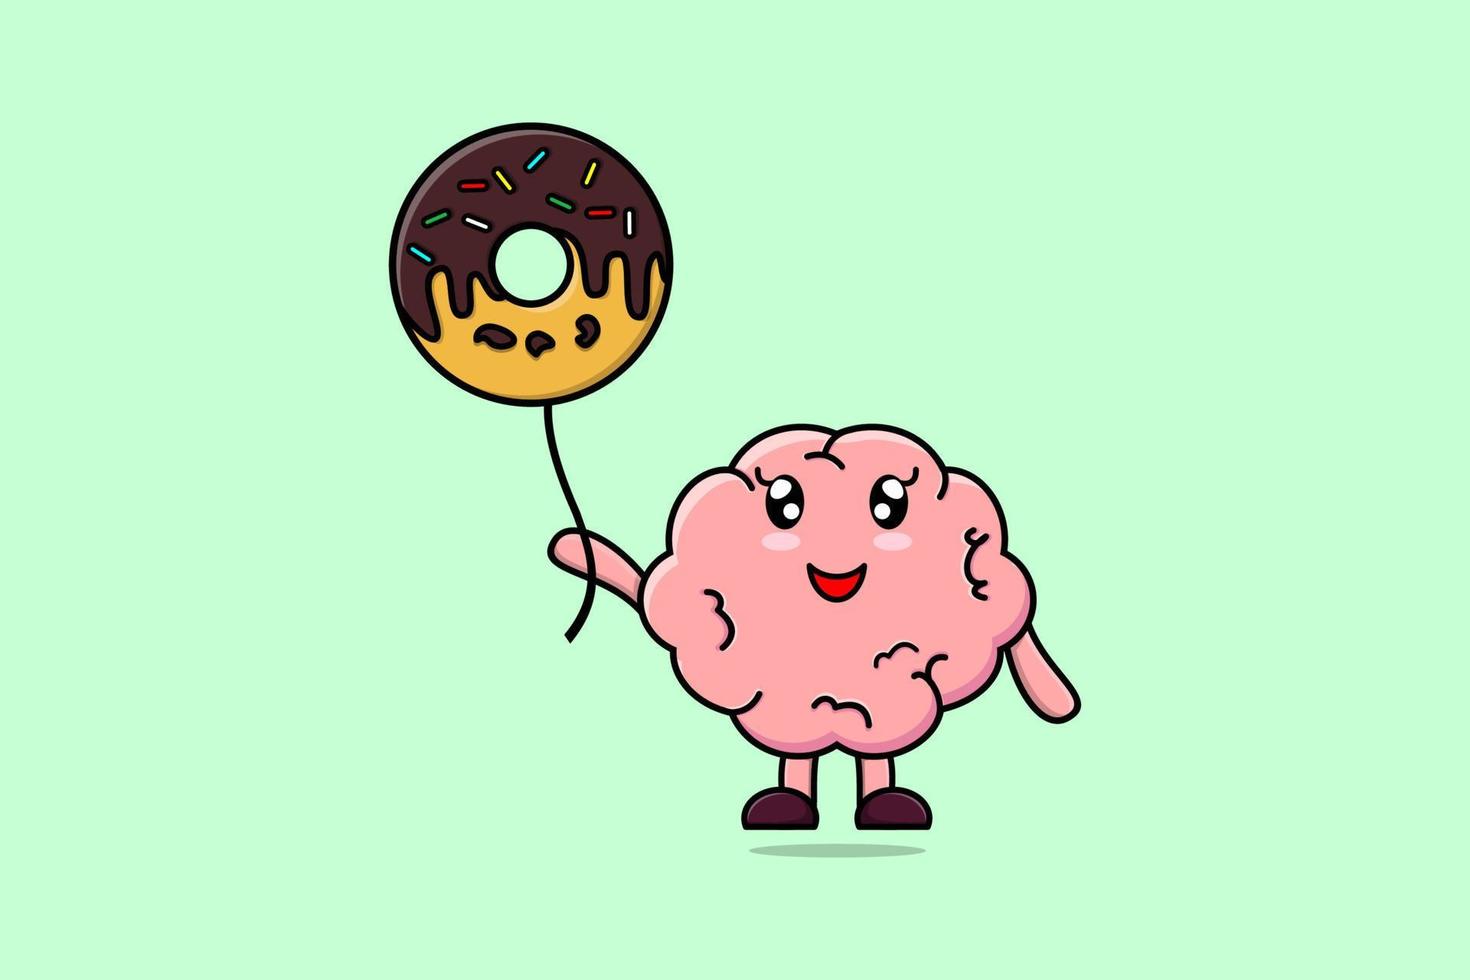 Cute cartoon Brain floating with donuts balloon vector